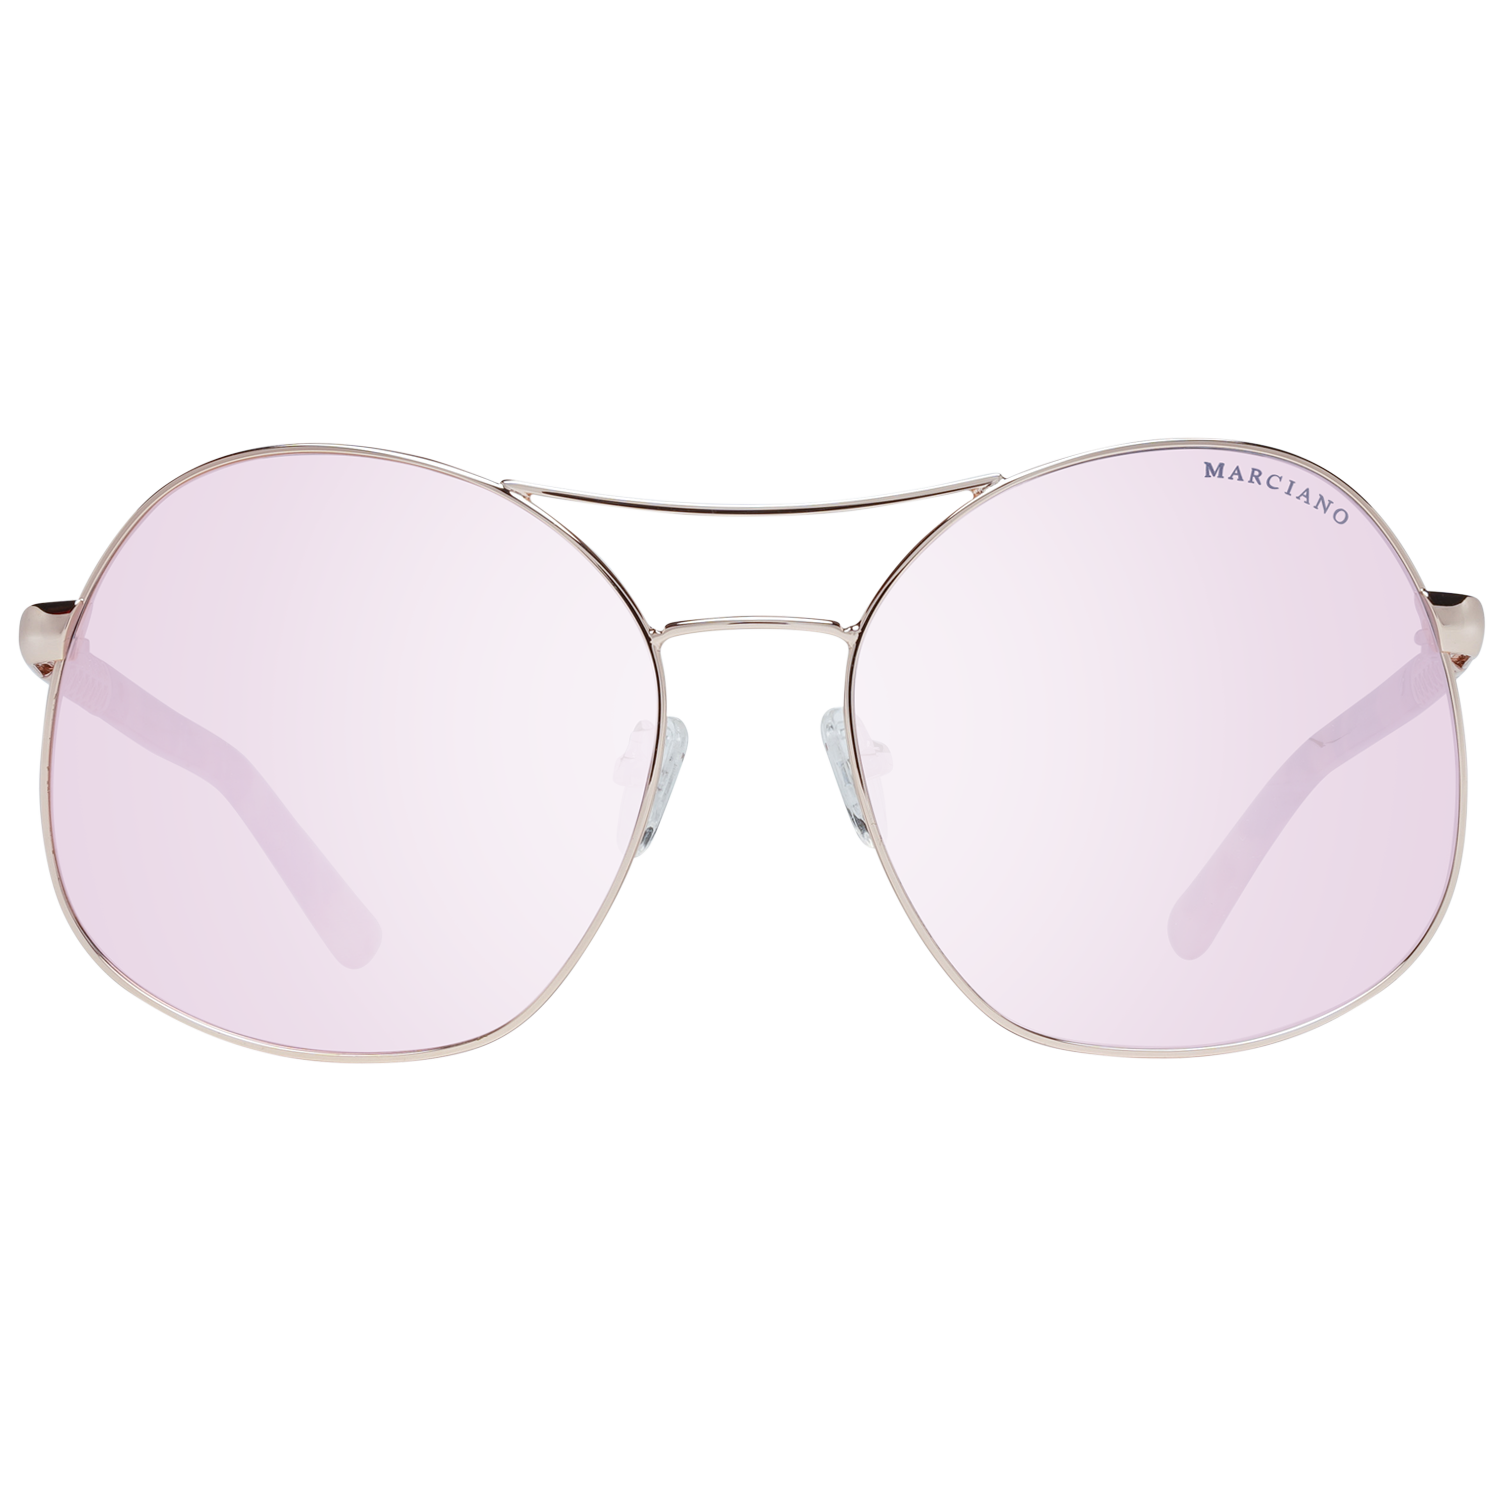 Marciano by Guess Sunglasses Marciano by Guess Sunglasses GM0807 28C 62 Eyeglasses Eyewear UK USA Australia 